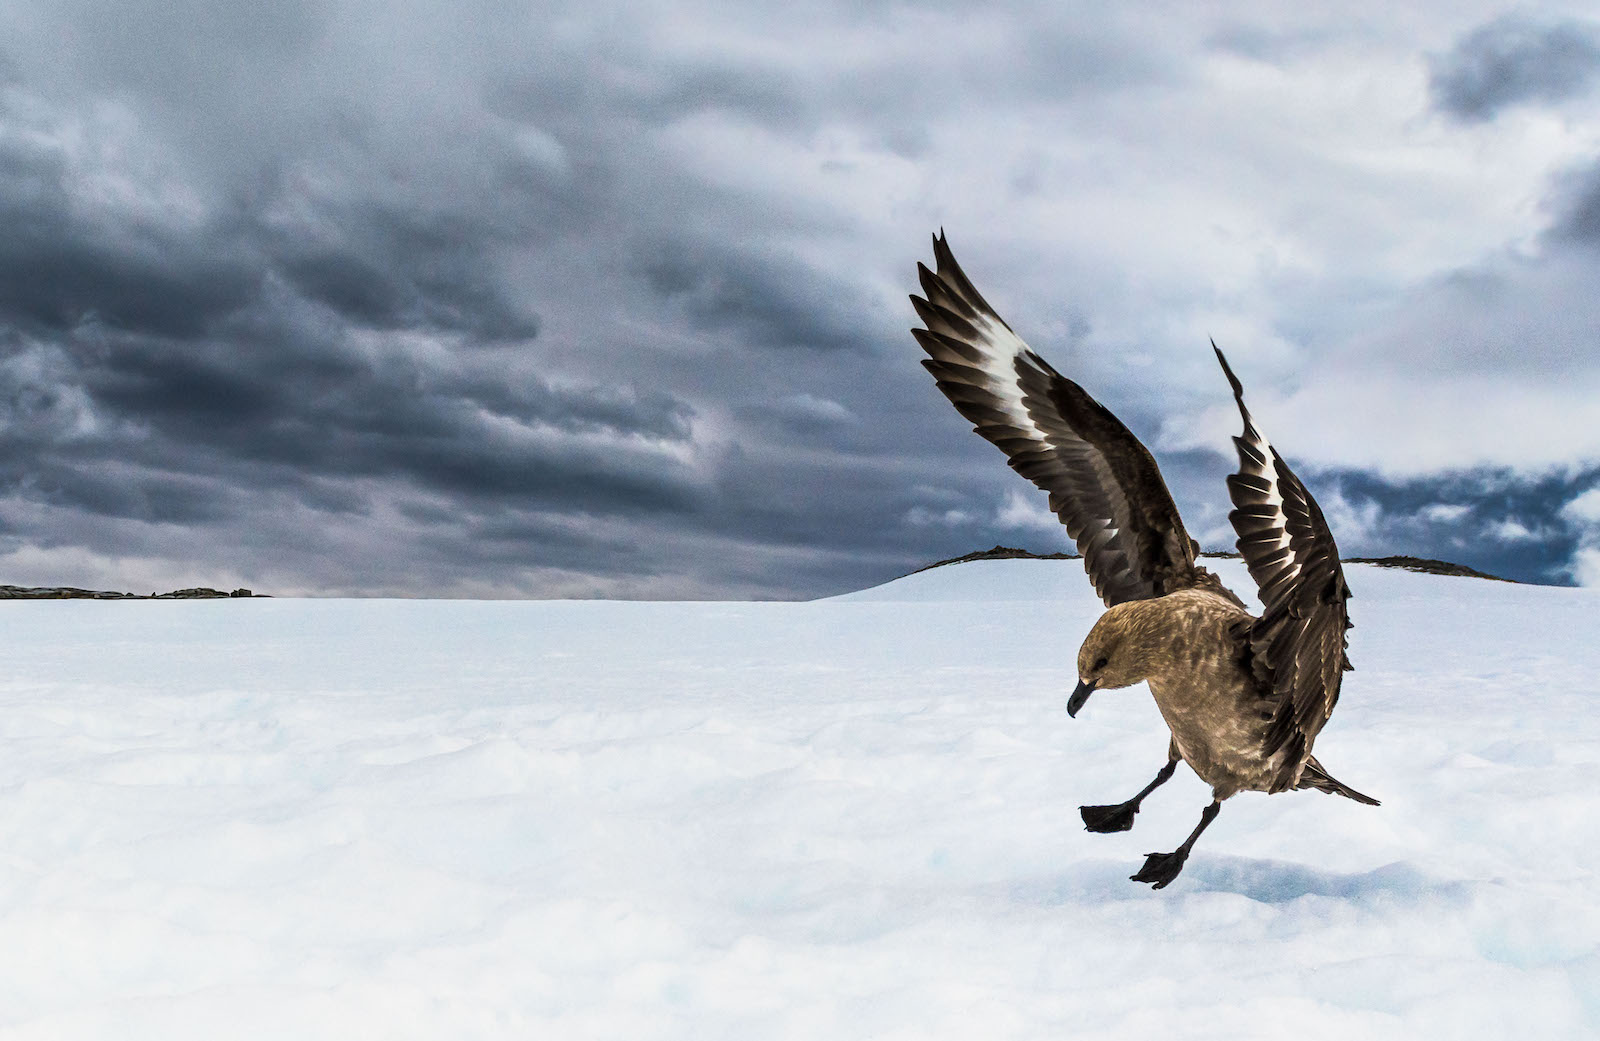 A subantarctic skua comes in for a landing.